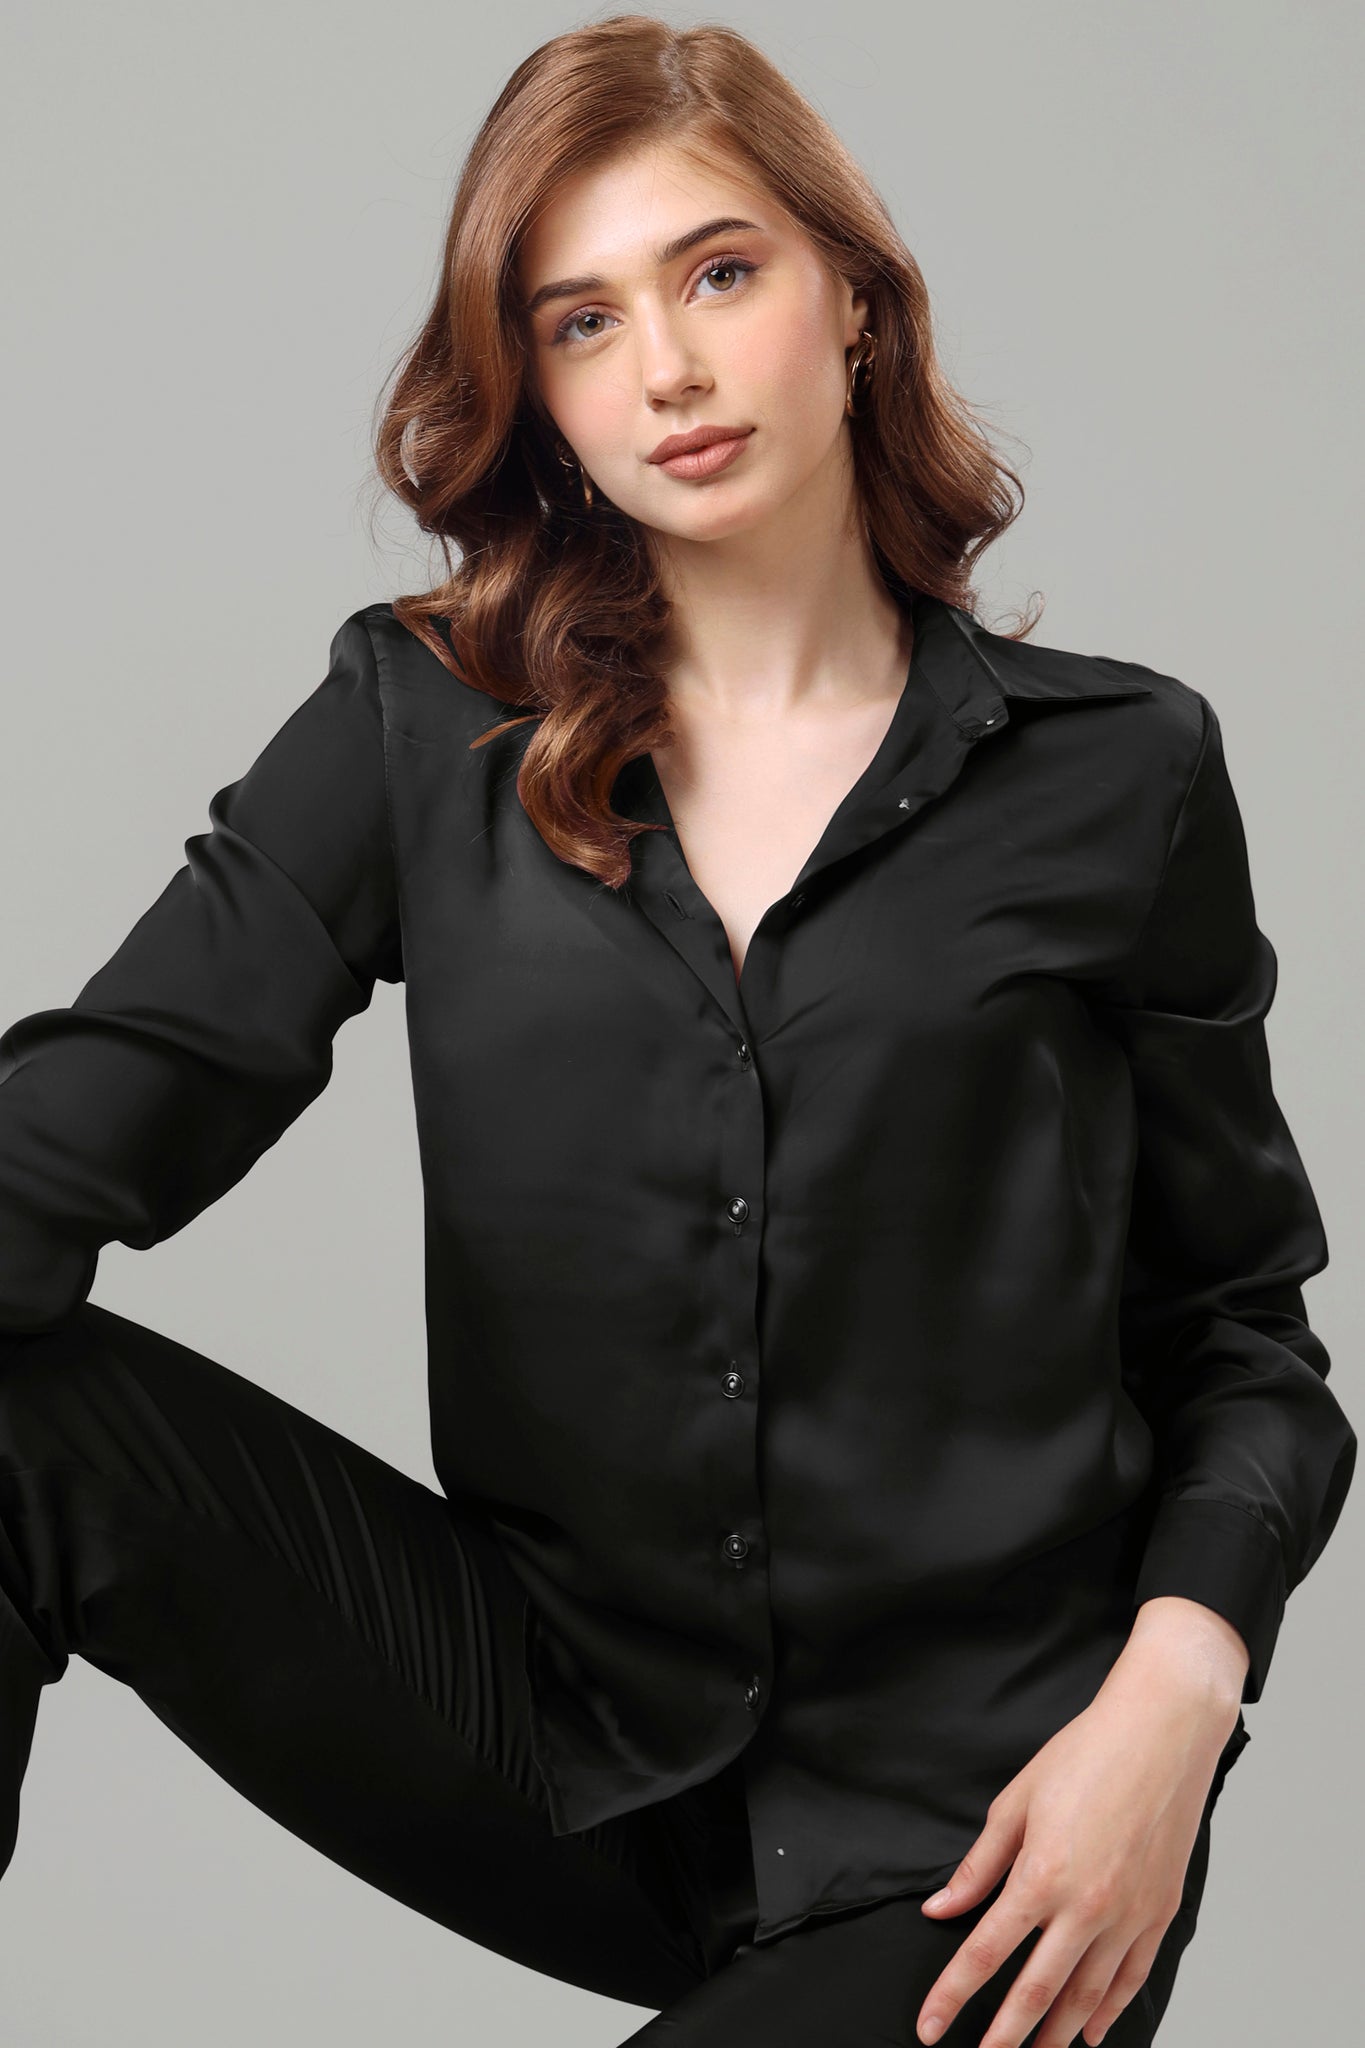 Luxurious Black Shirt For Women